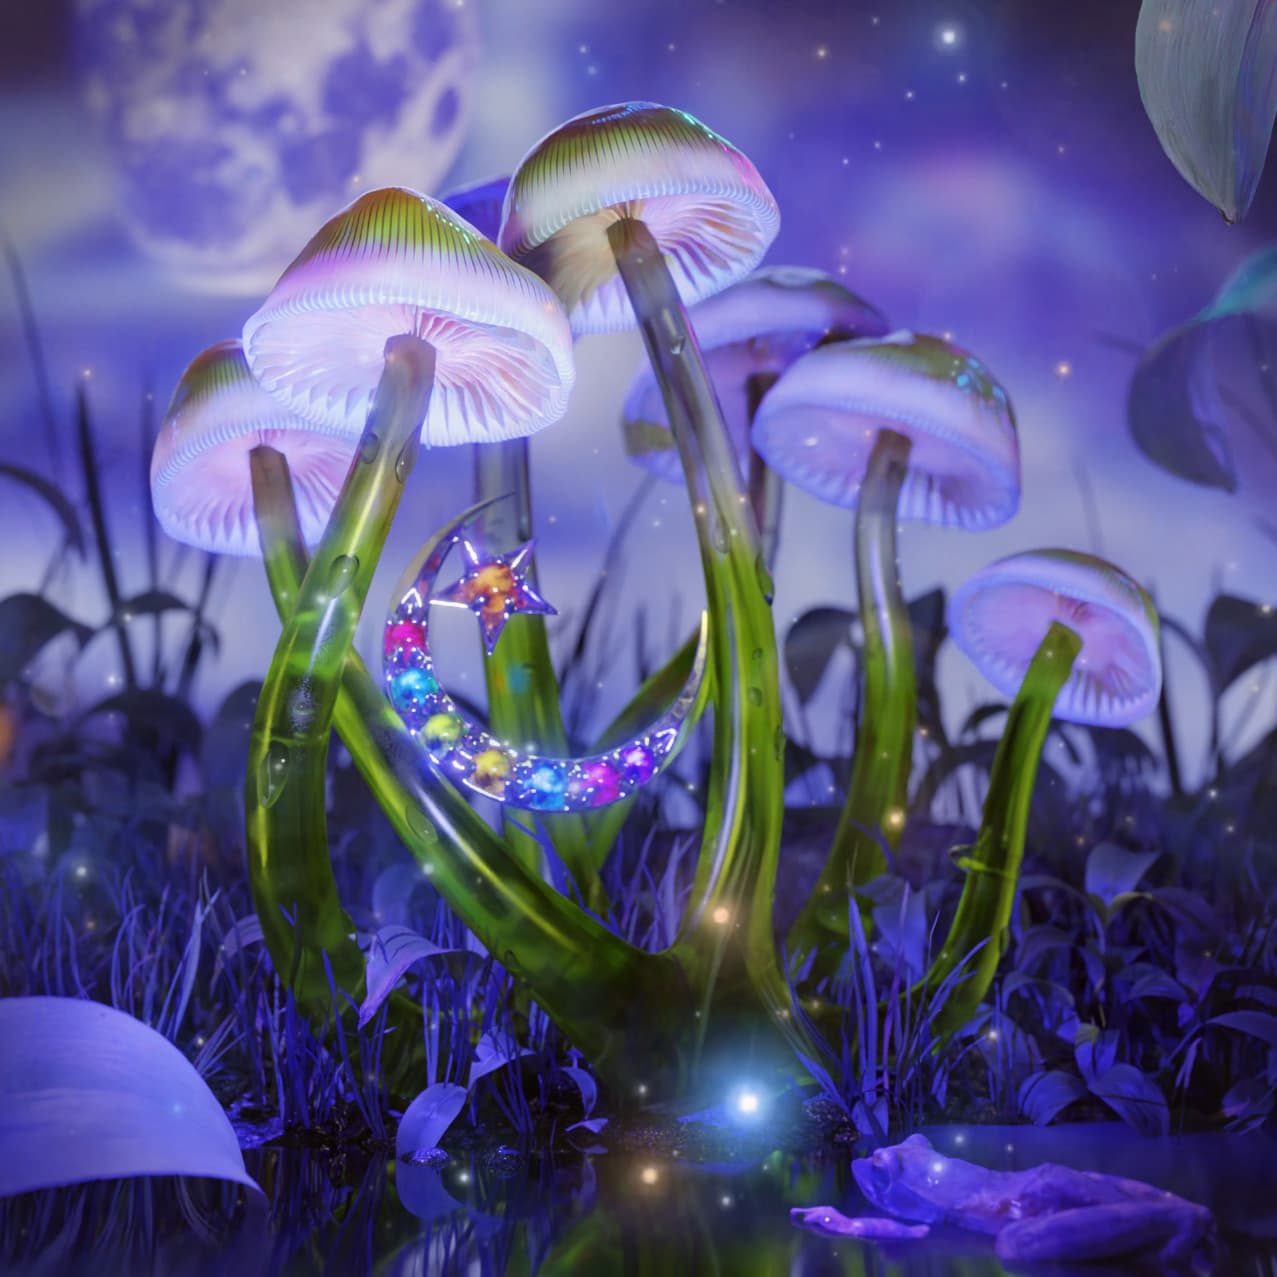 CGI image of mushrooms and moon shaped charm